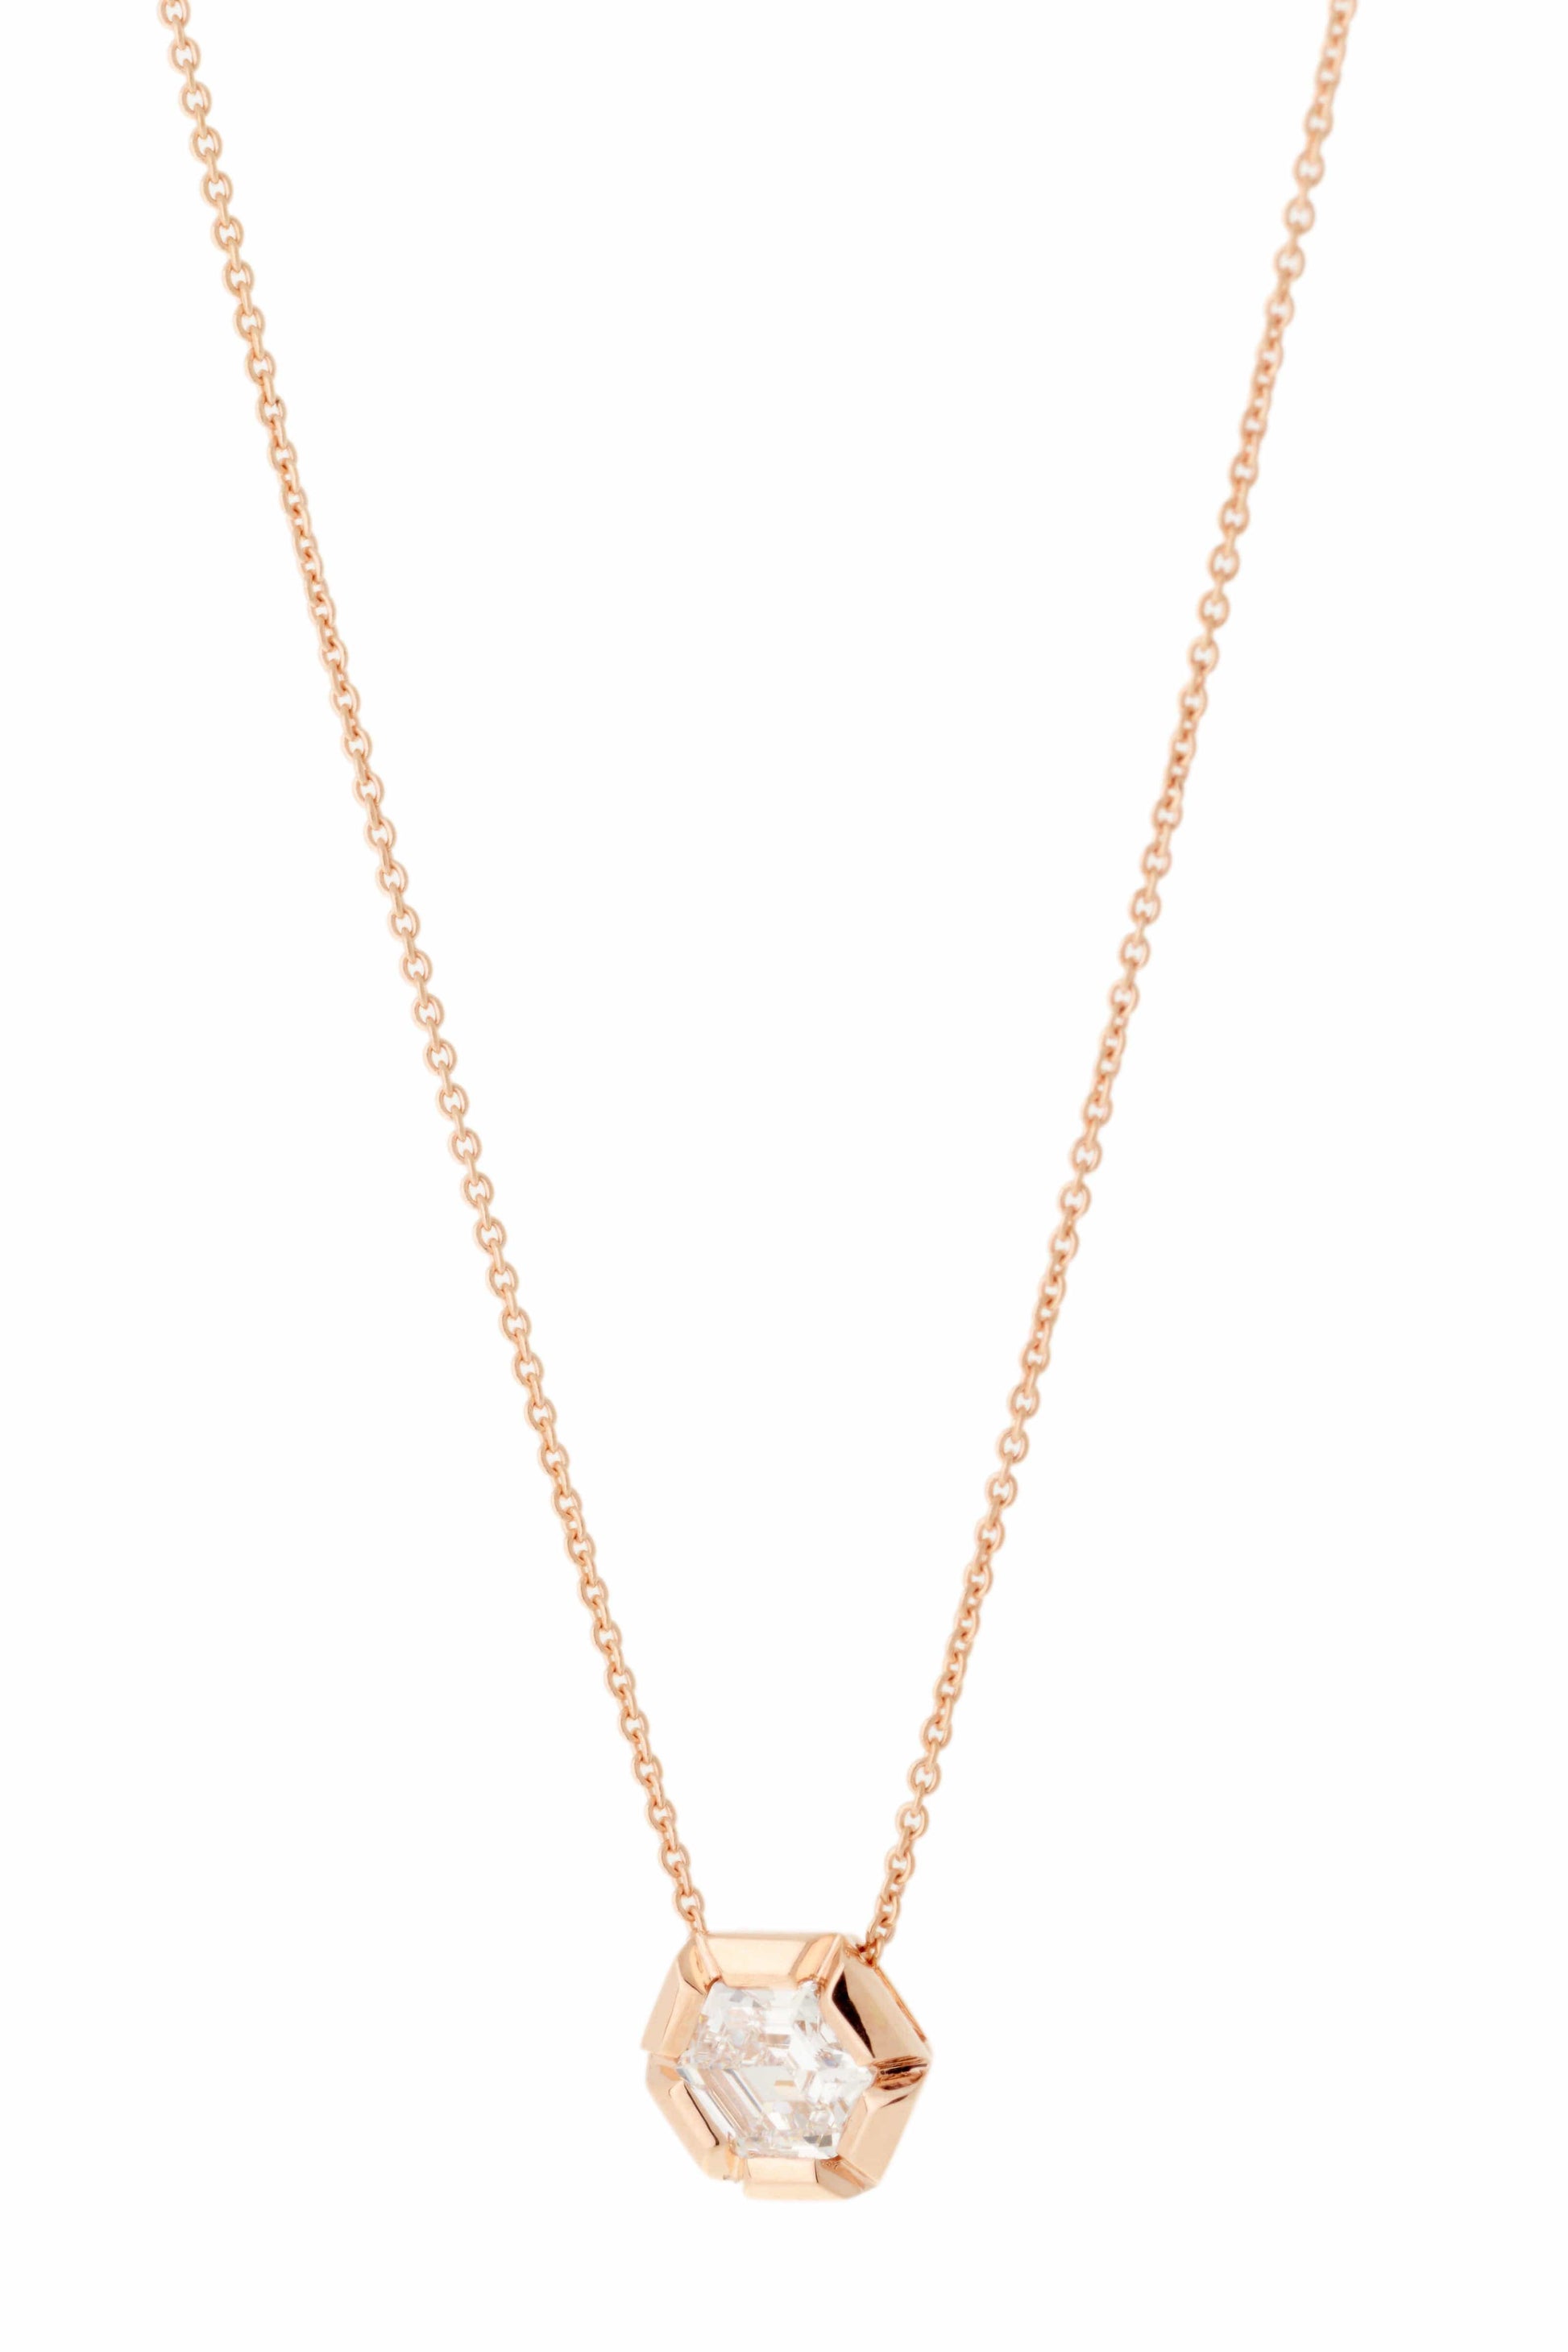 SELIM MOUZANNAR-Rose de France Diamond Pendant Necklace-ROSE GOLD